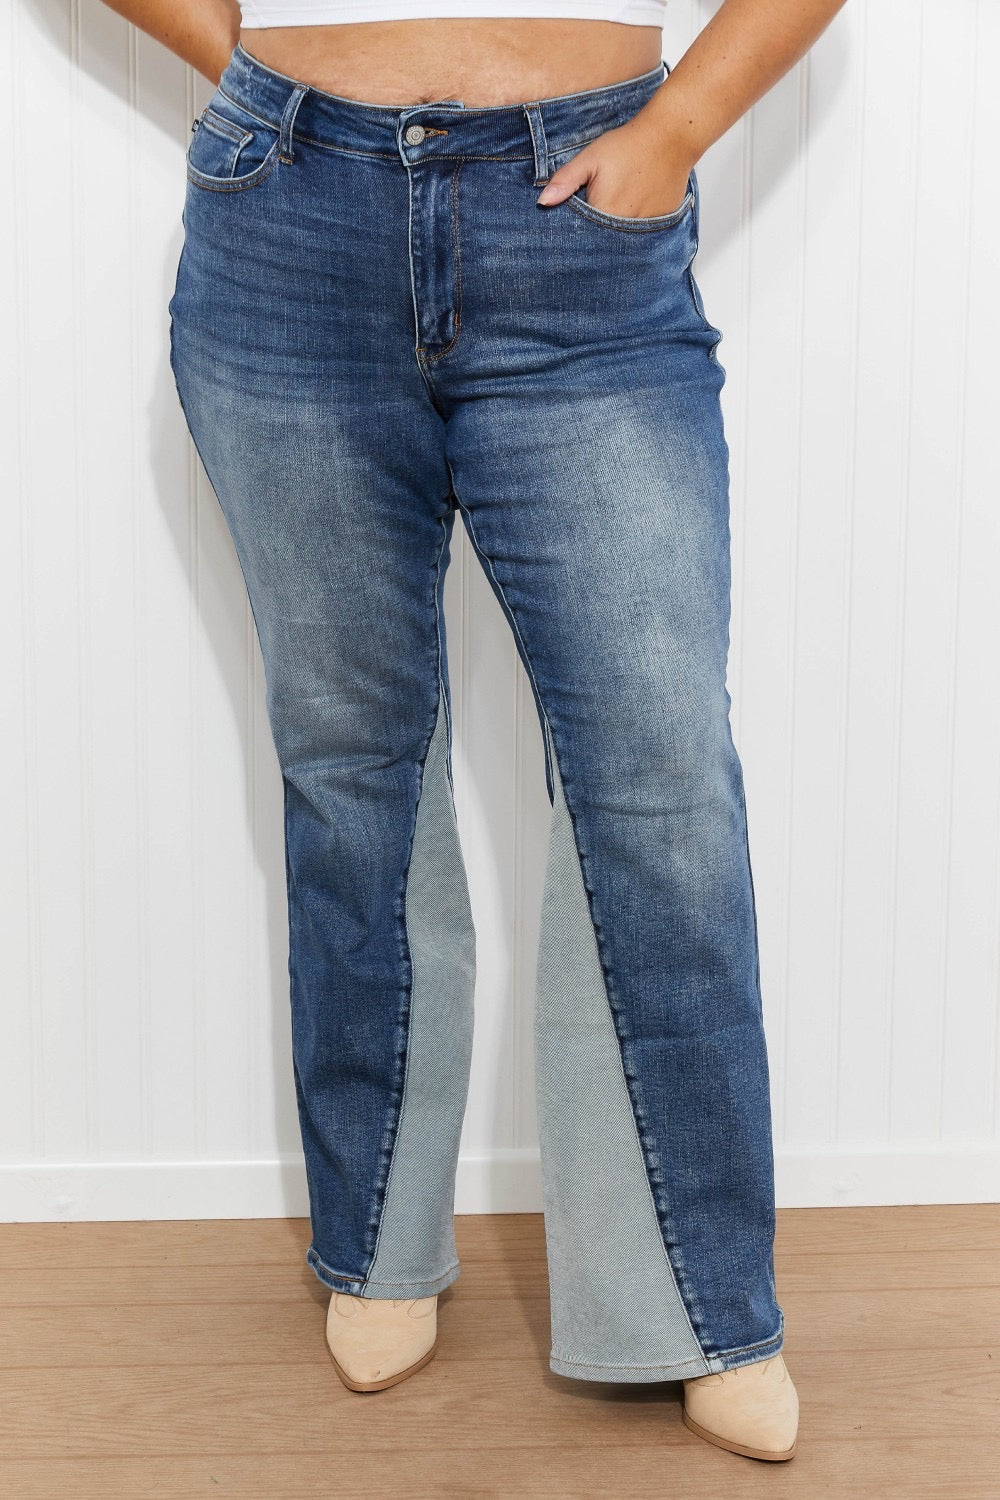 Judy Blue Split Decision Mid-Rise Panel Flare Jeans Medium Wash 14W 